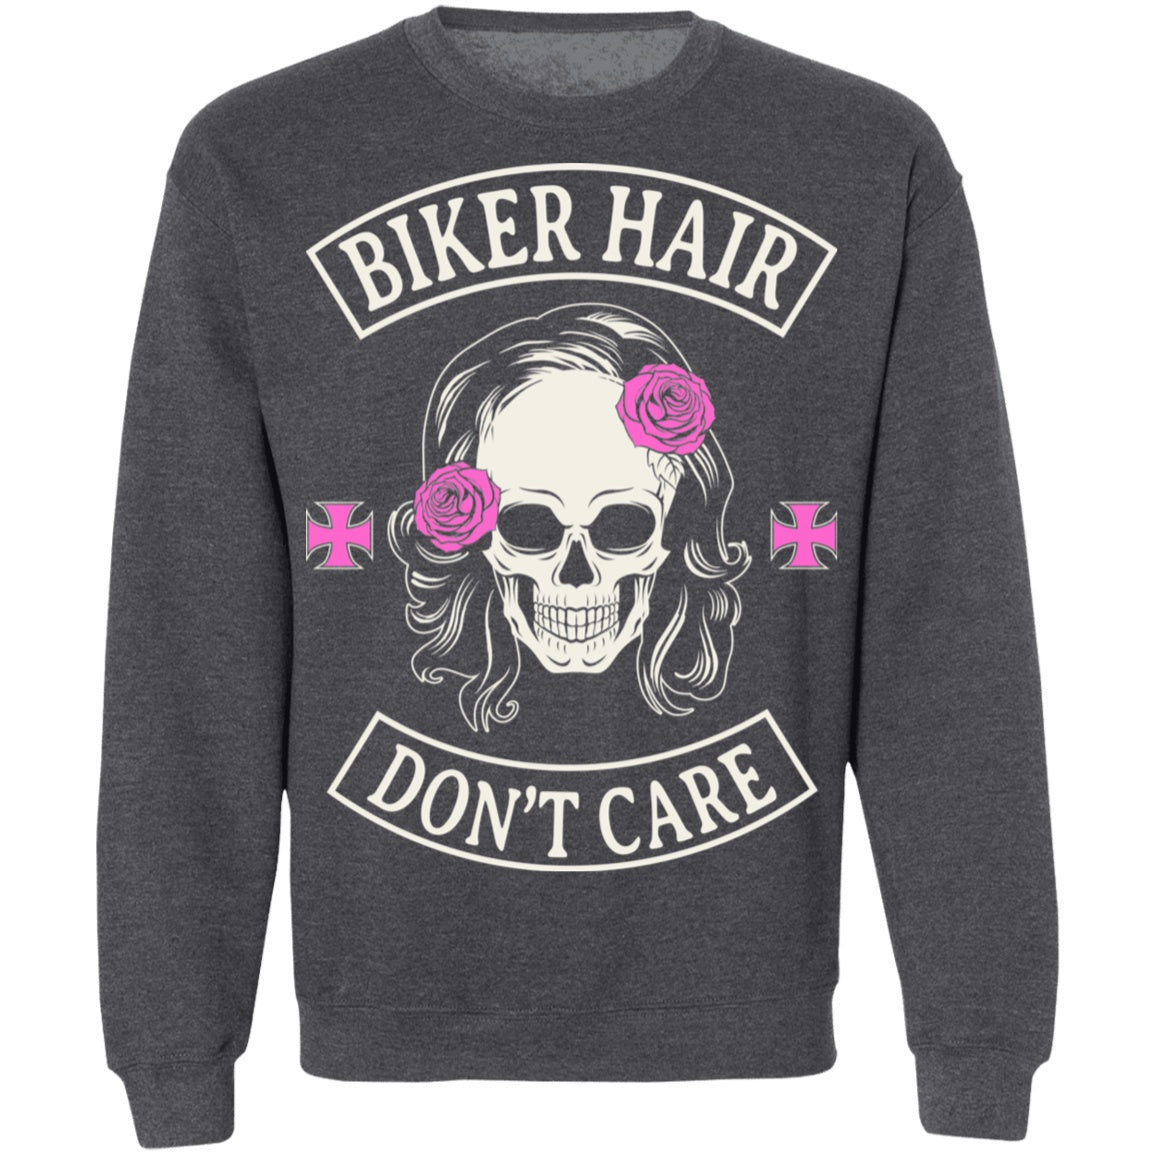 Apparel - Biker Hair, Don't Care Shirt